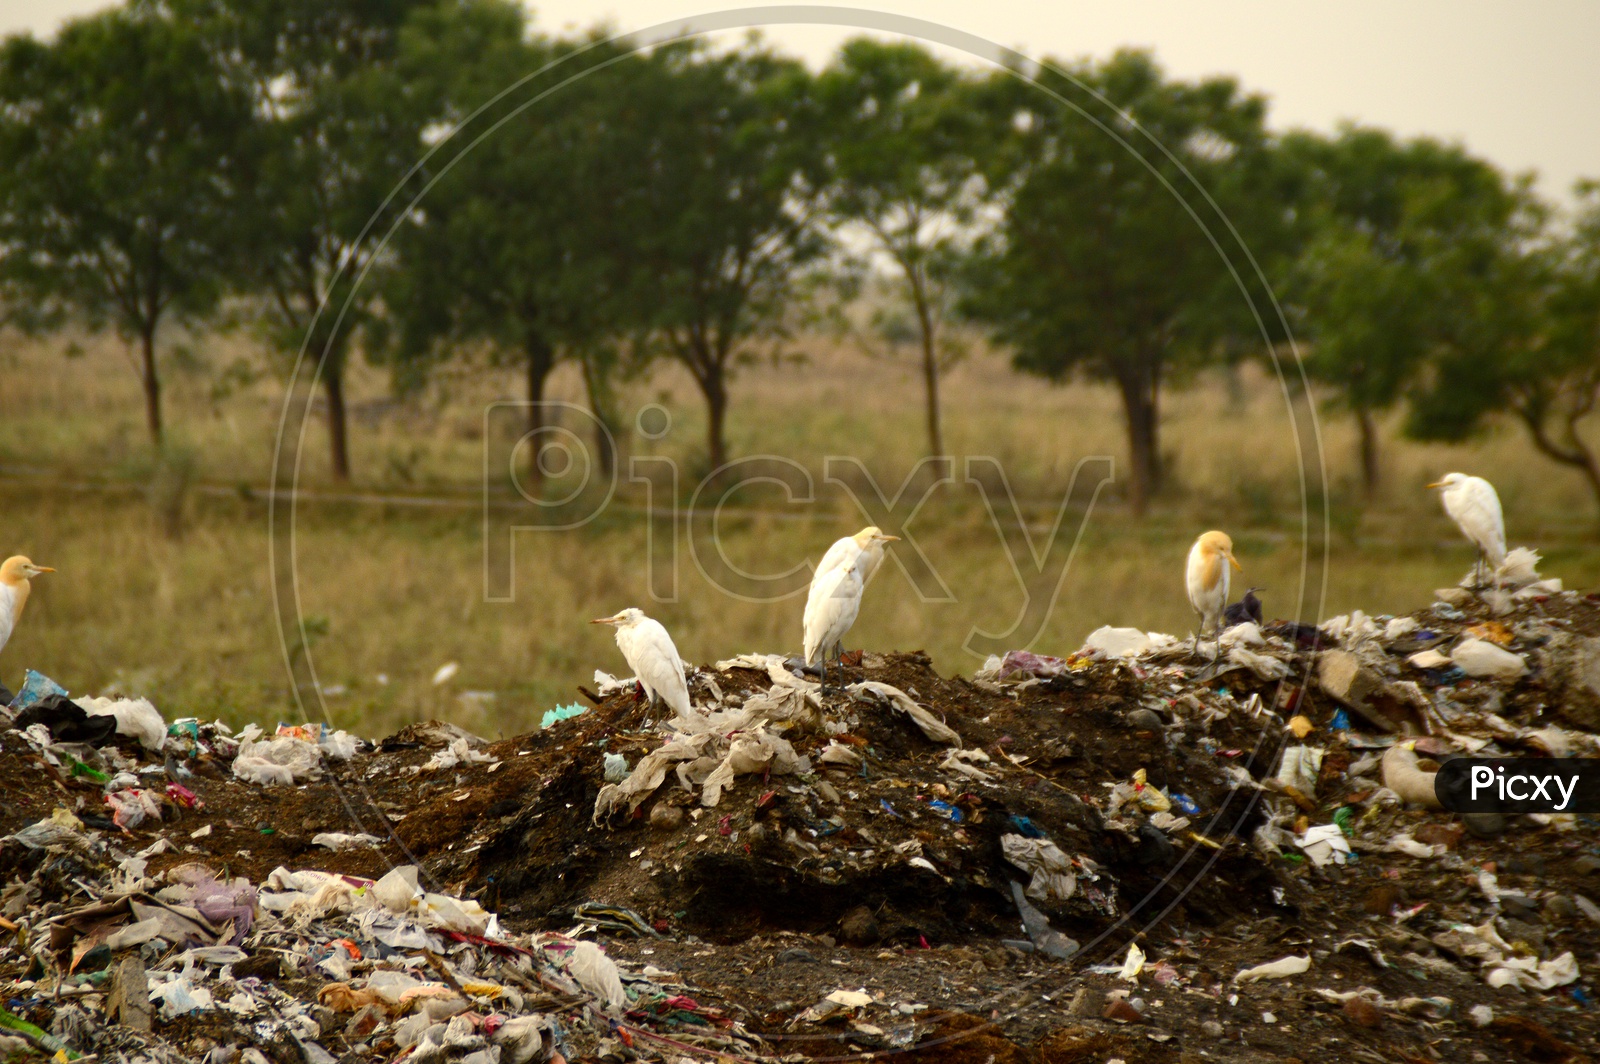 Indian  Crane Birds on the Garbage Piles